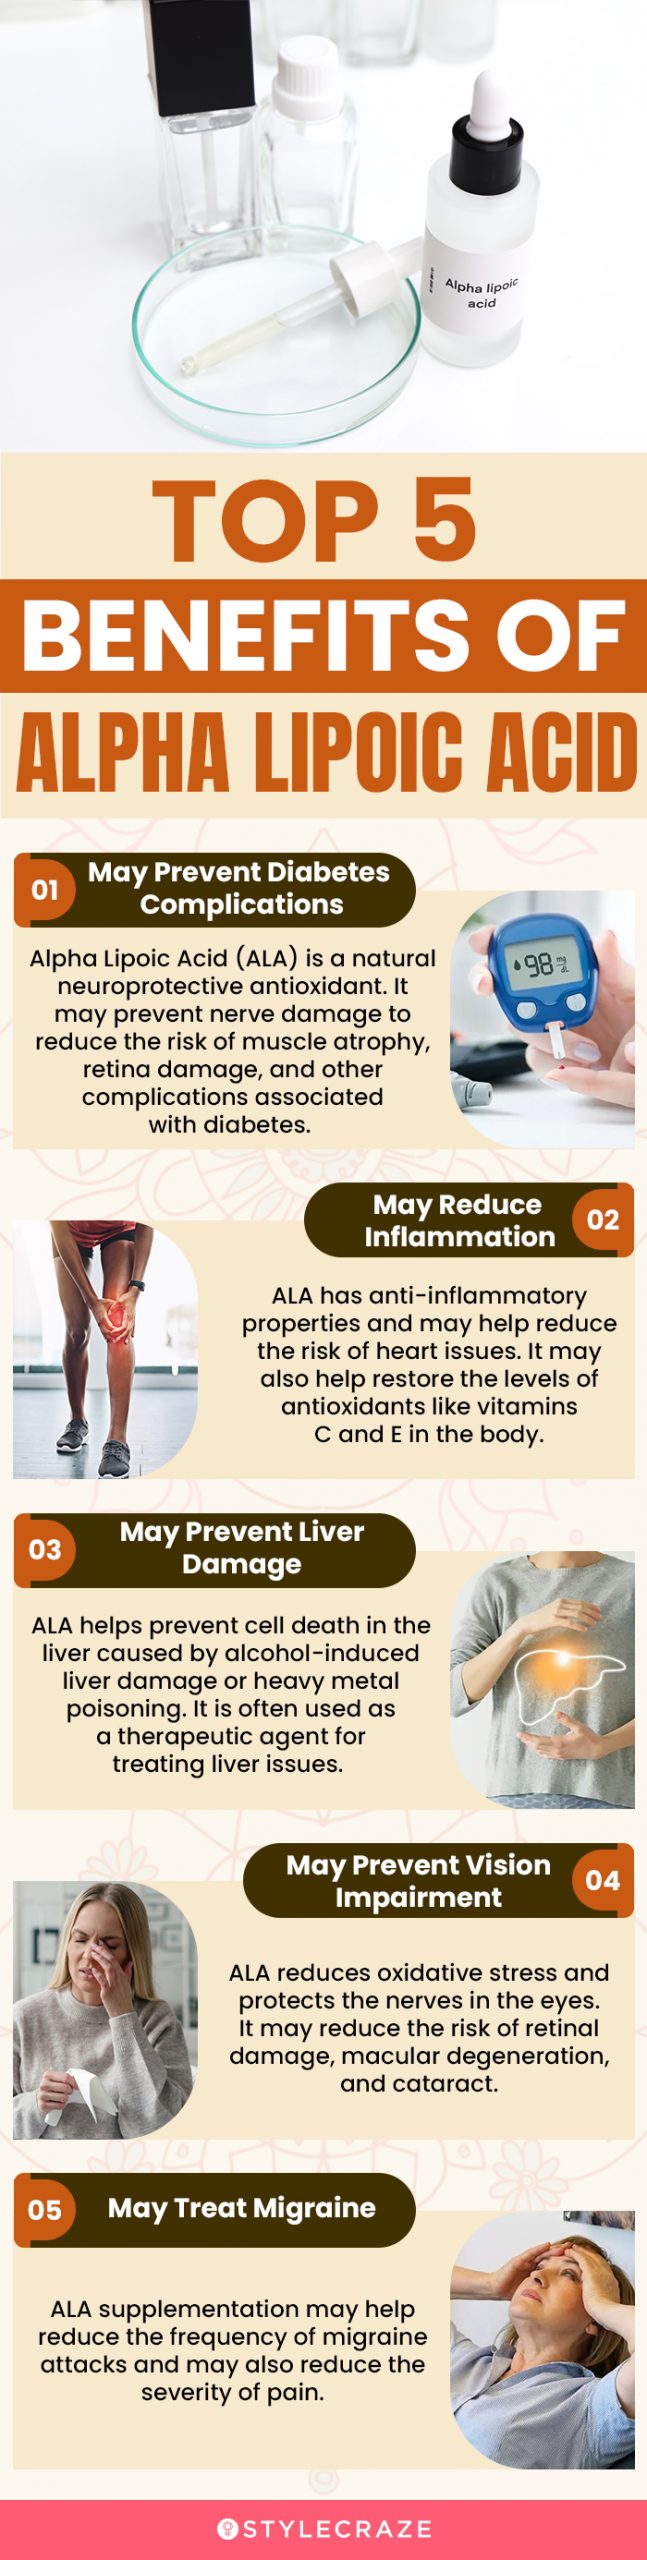 top 5 benefits of alpha lipoic acid (infographic)